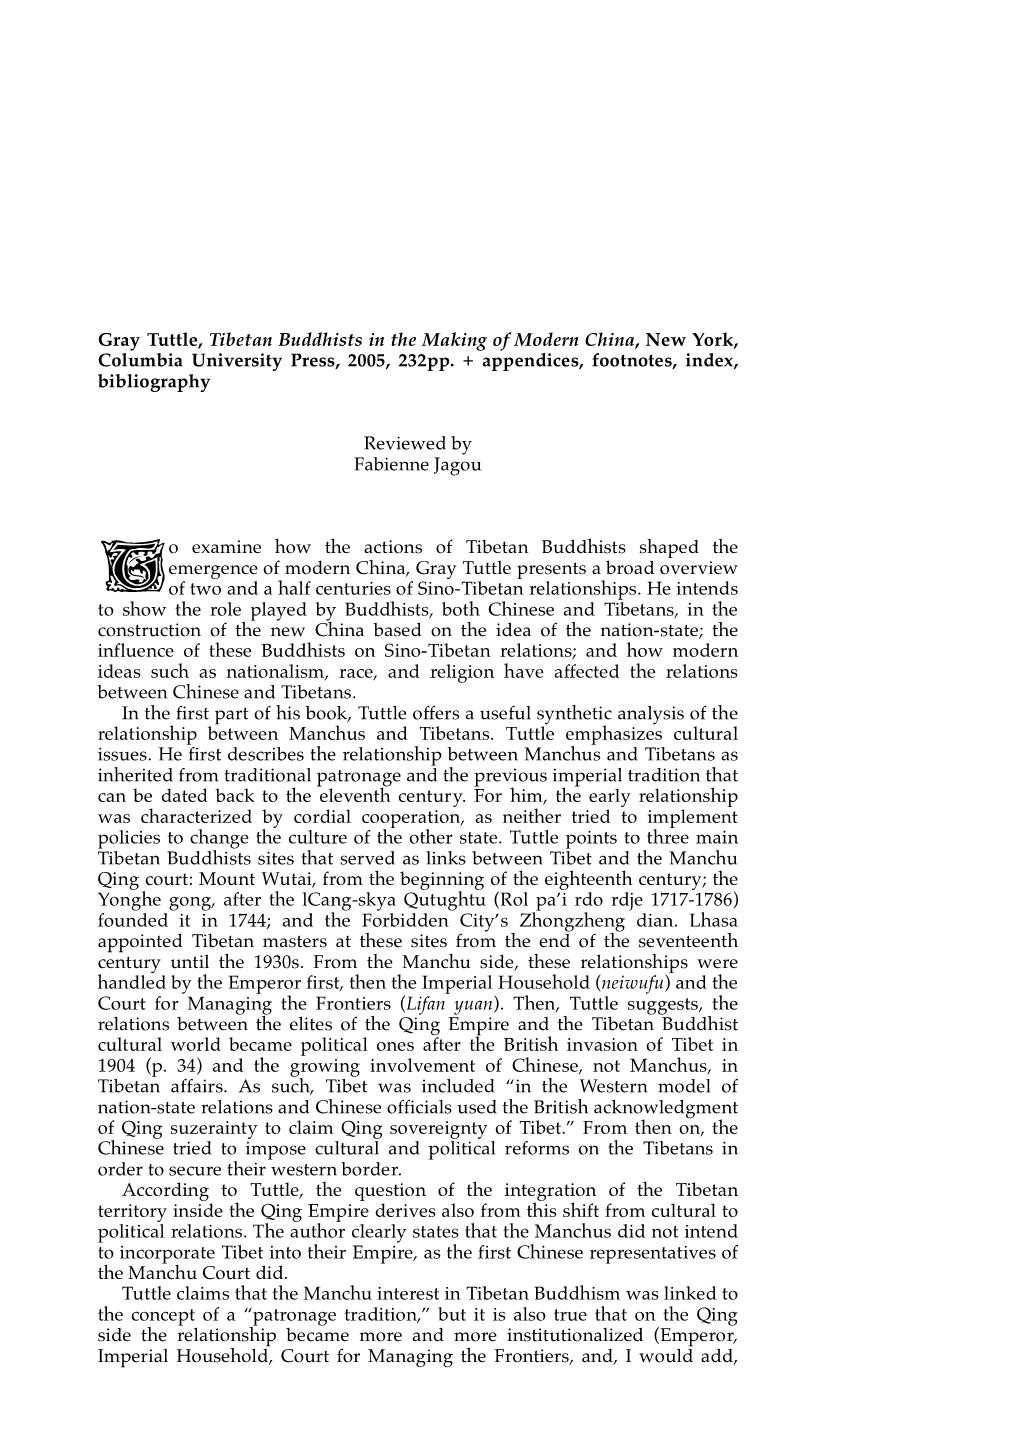 Gray Tuttle, Tibetan Buddhists in the Making of Modern China, New York, Columbia University Press, 2005, 232Pp